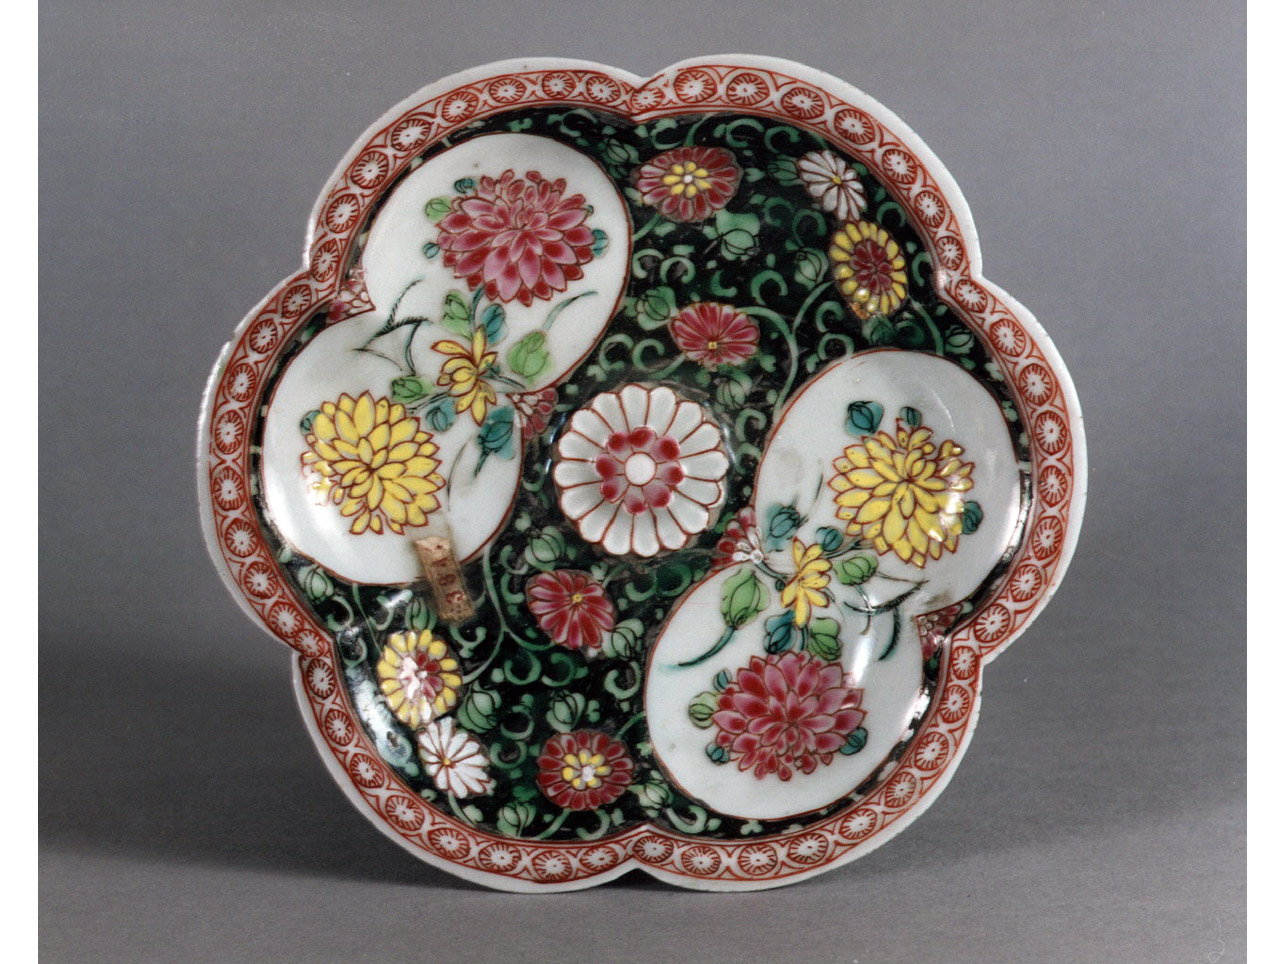 motivi decorativi floreali (piattino) - manifattura cinese (sec. XVIII)